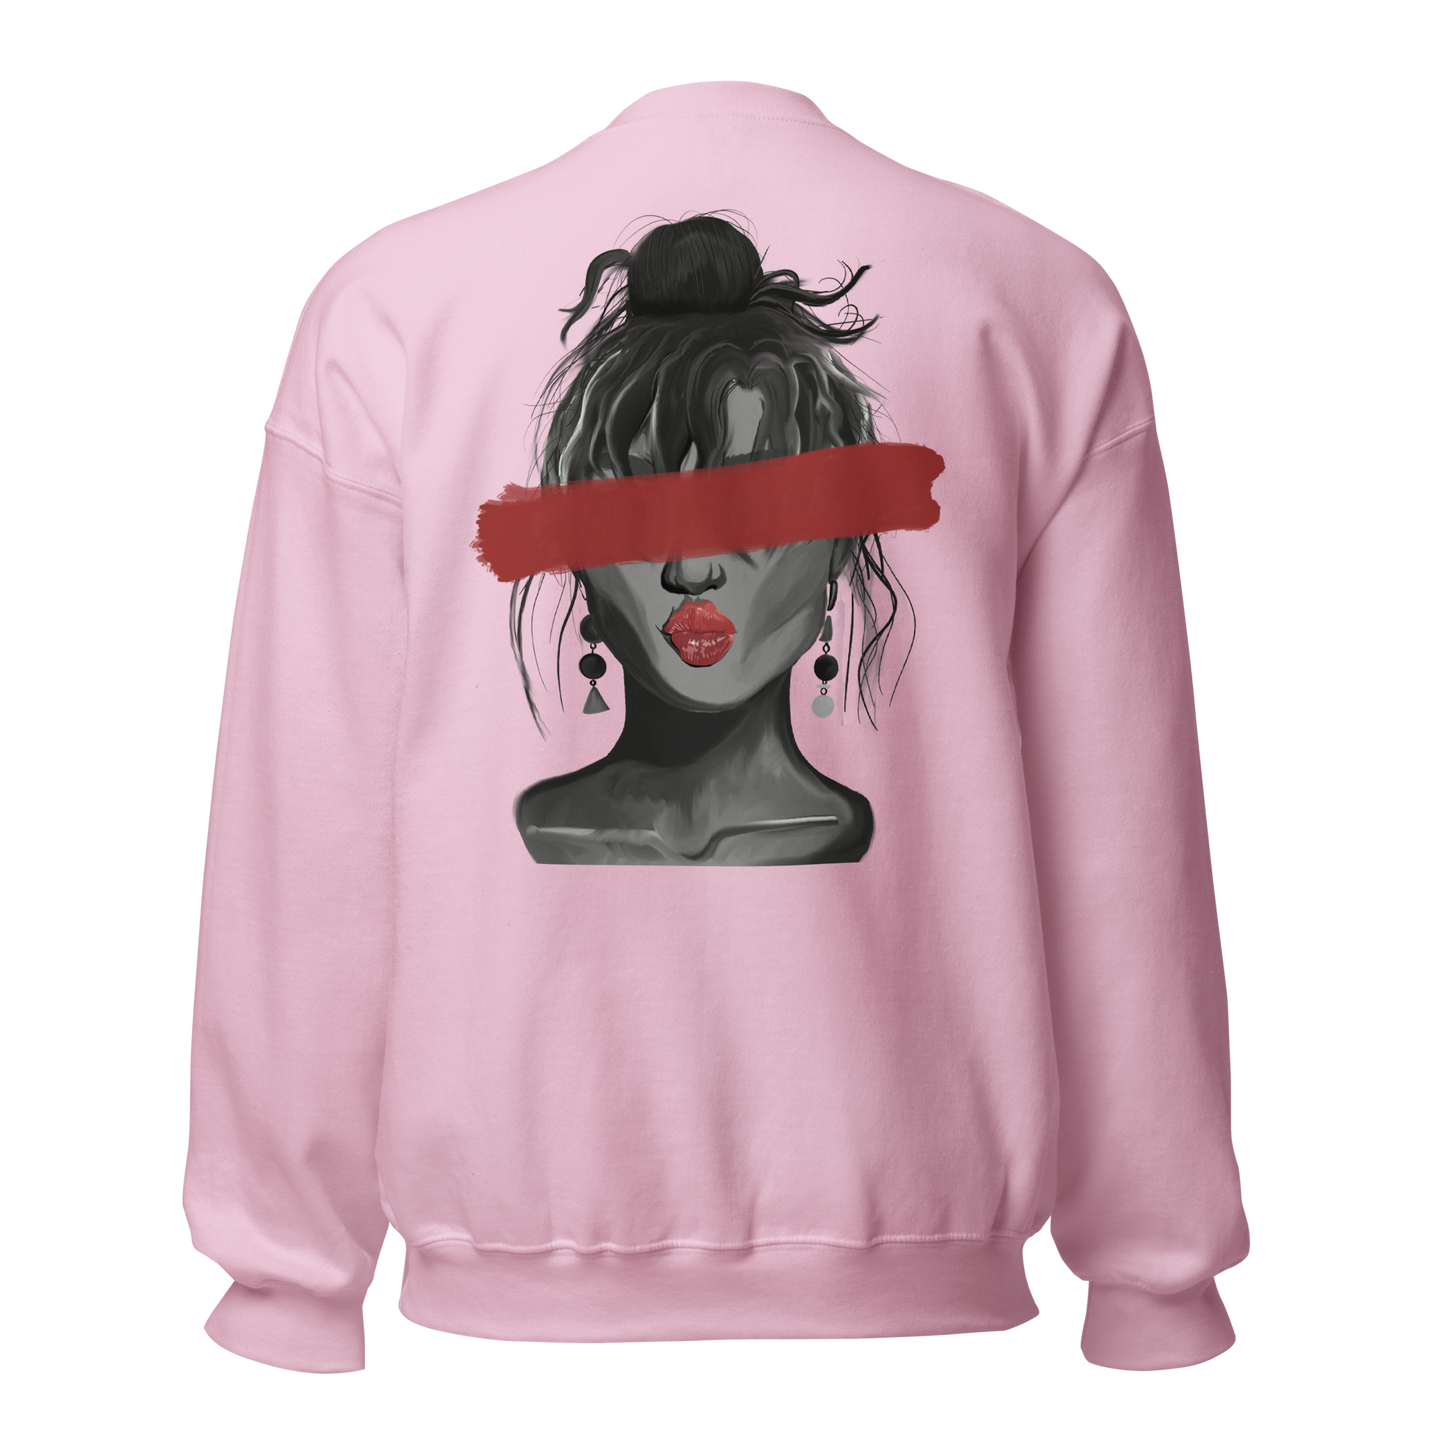 Mysterious Woman in Grey (Back) - Unisex Sweatshirt